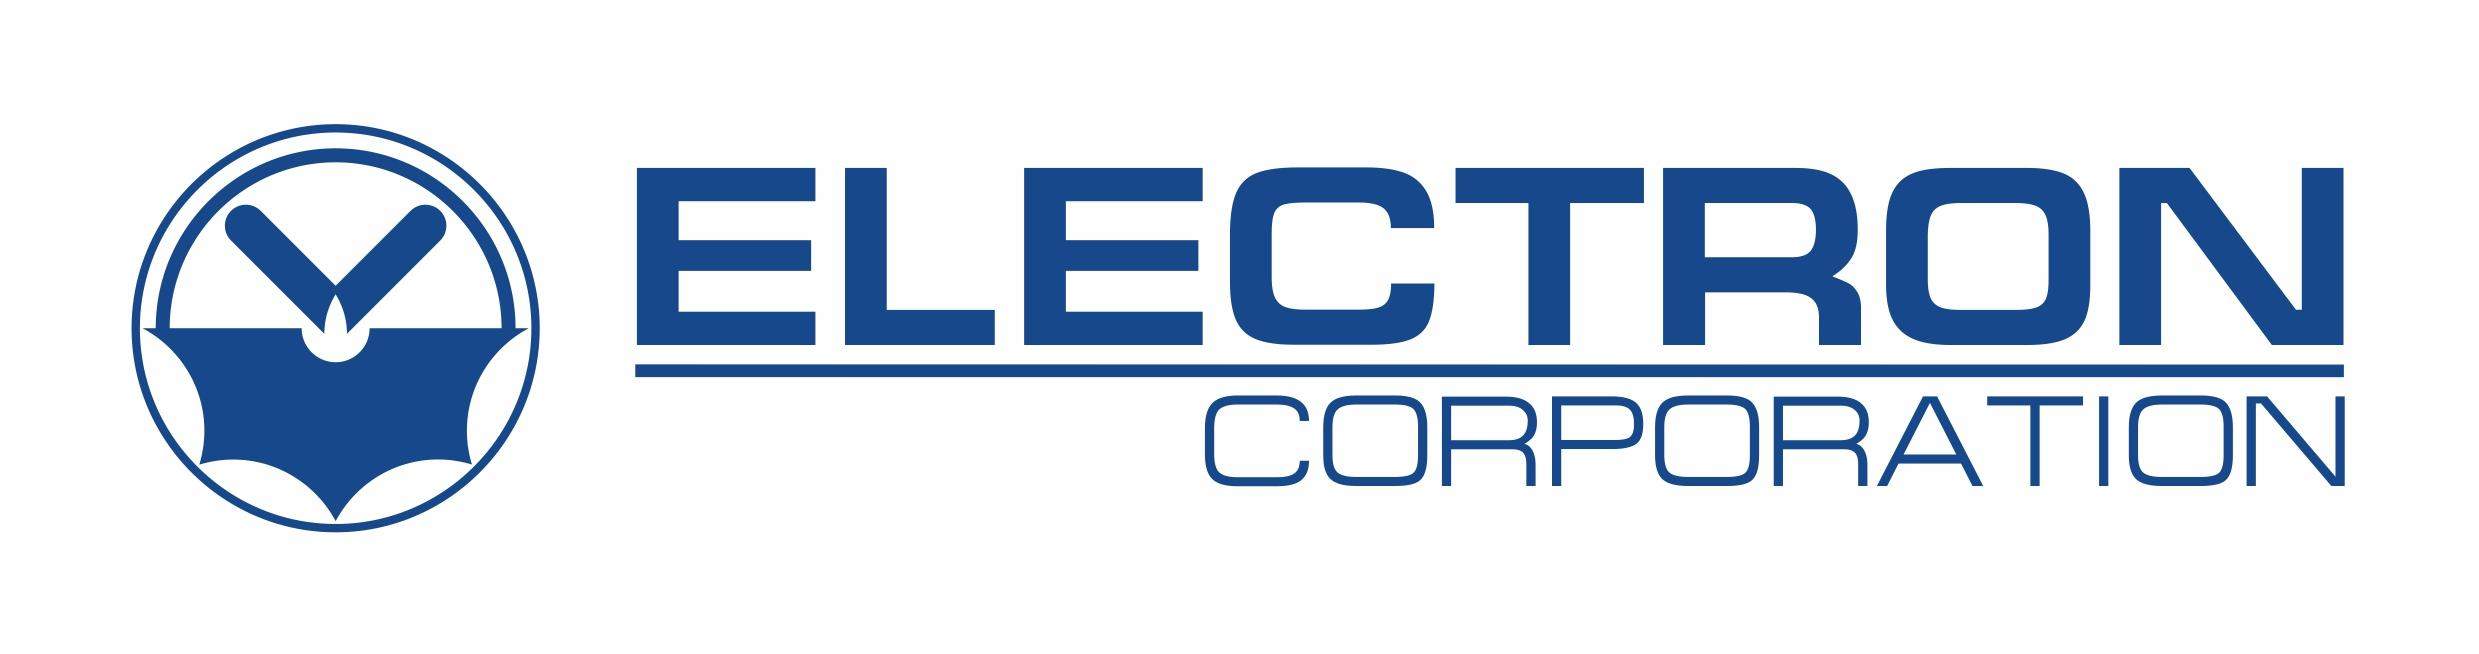 Логотип компании 